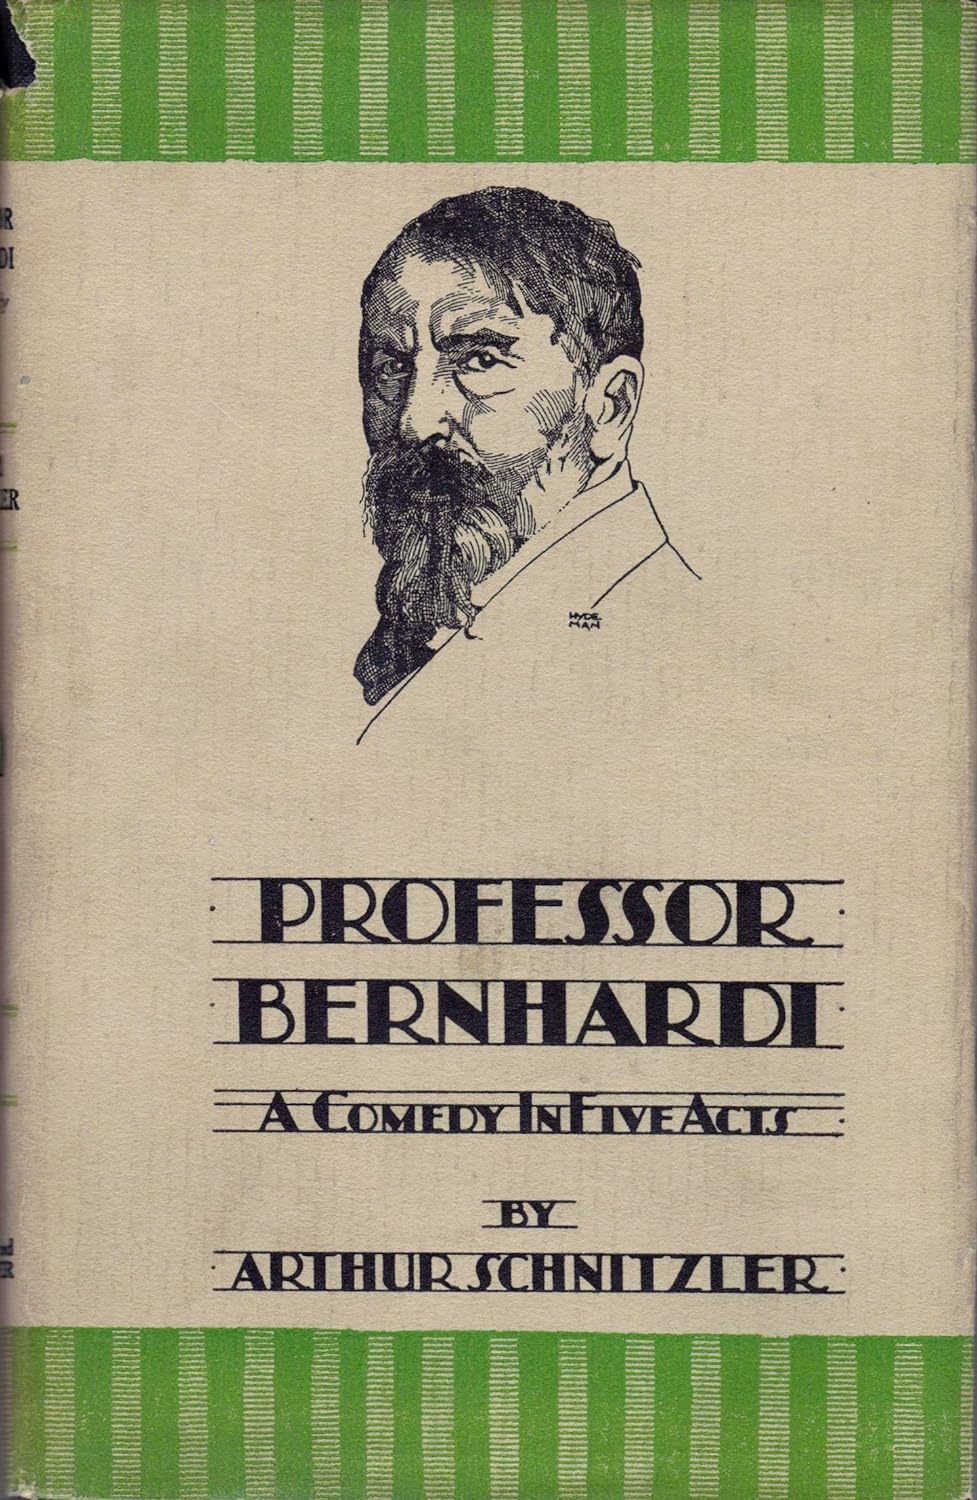 Professor Bernhardi; a comedy - Schnitzler, Arthur, 1862-1931